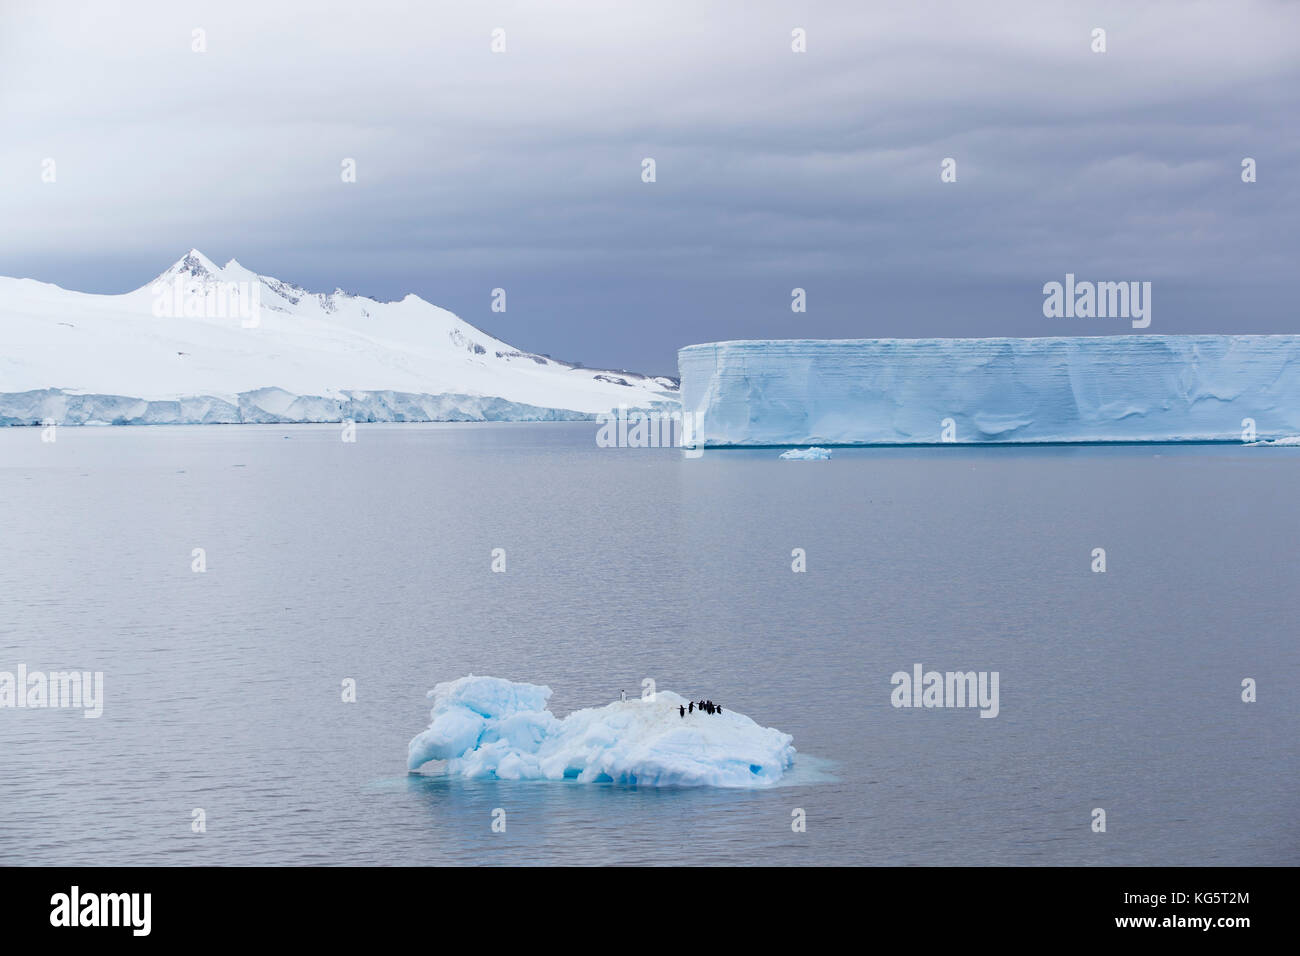 Iceberg tabulari, Antartide Foto Stock